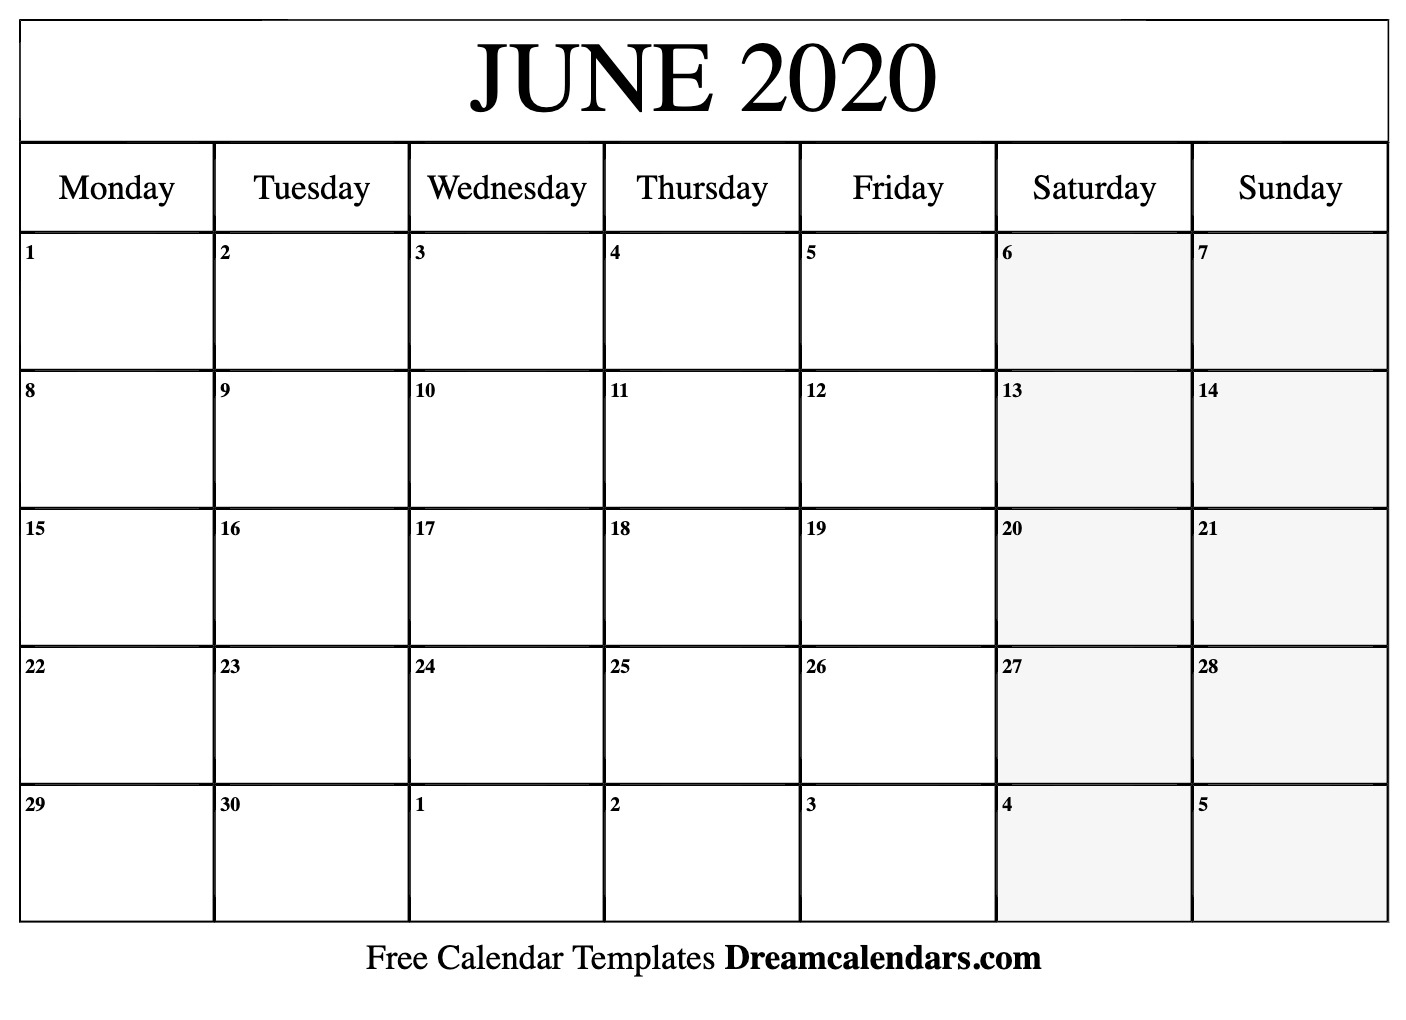 Free Calendar June 2020 - Wpa.wpart.co